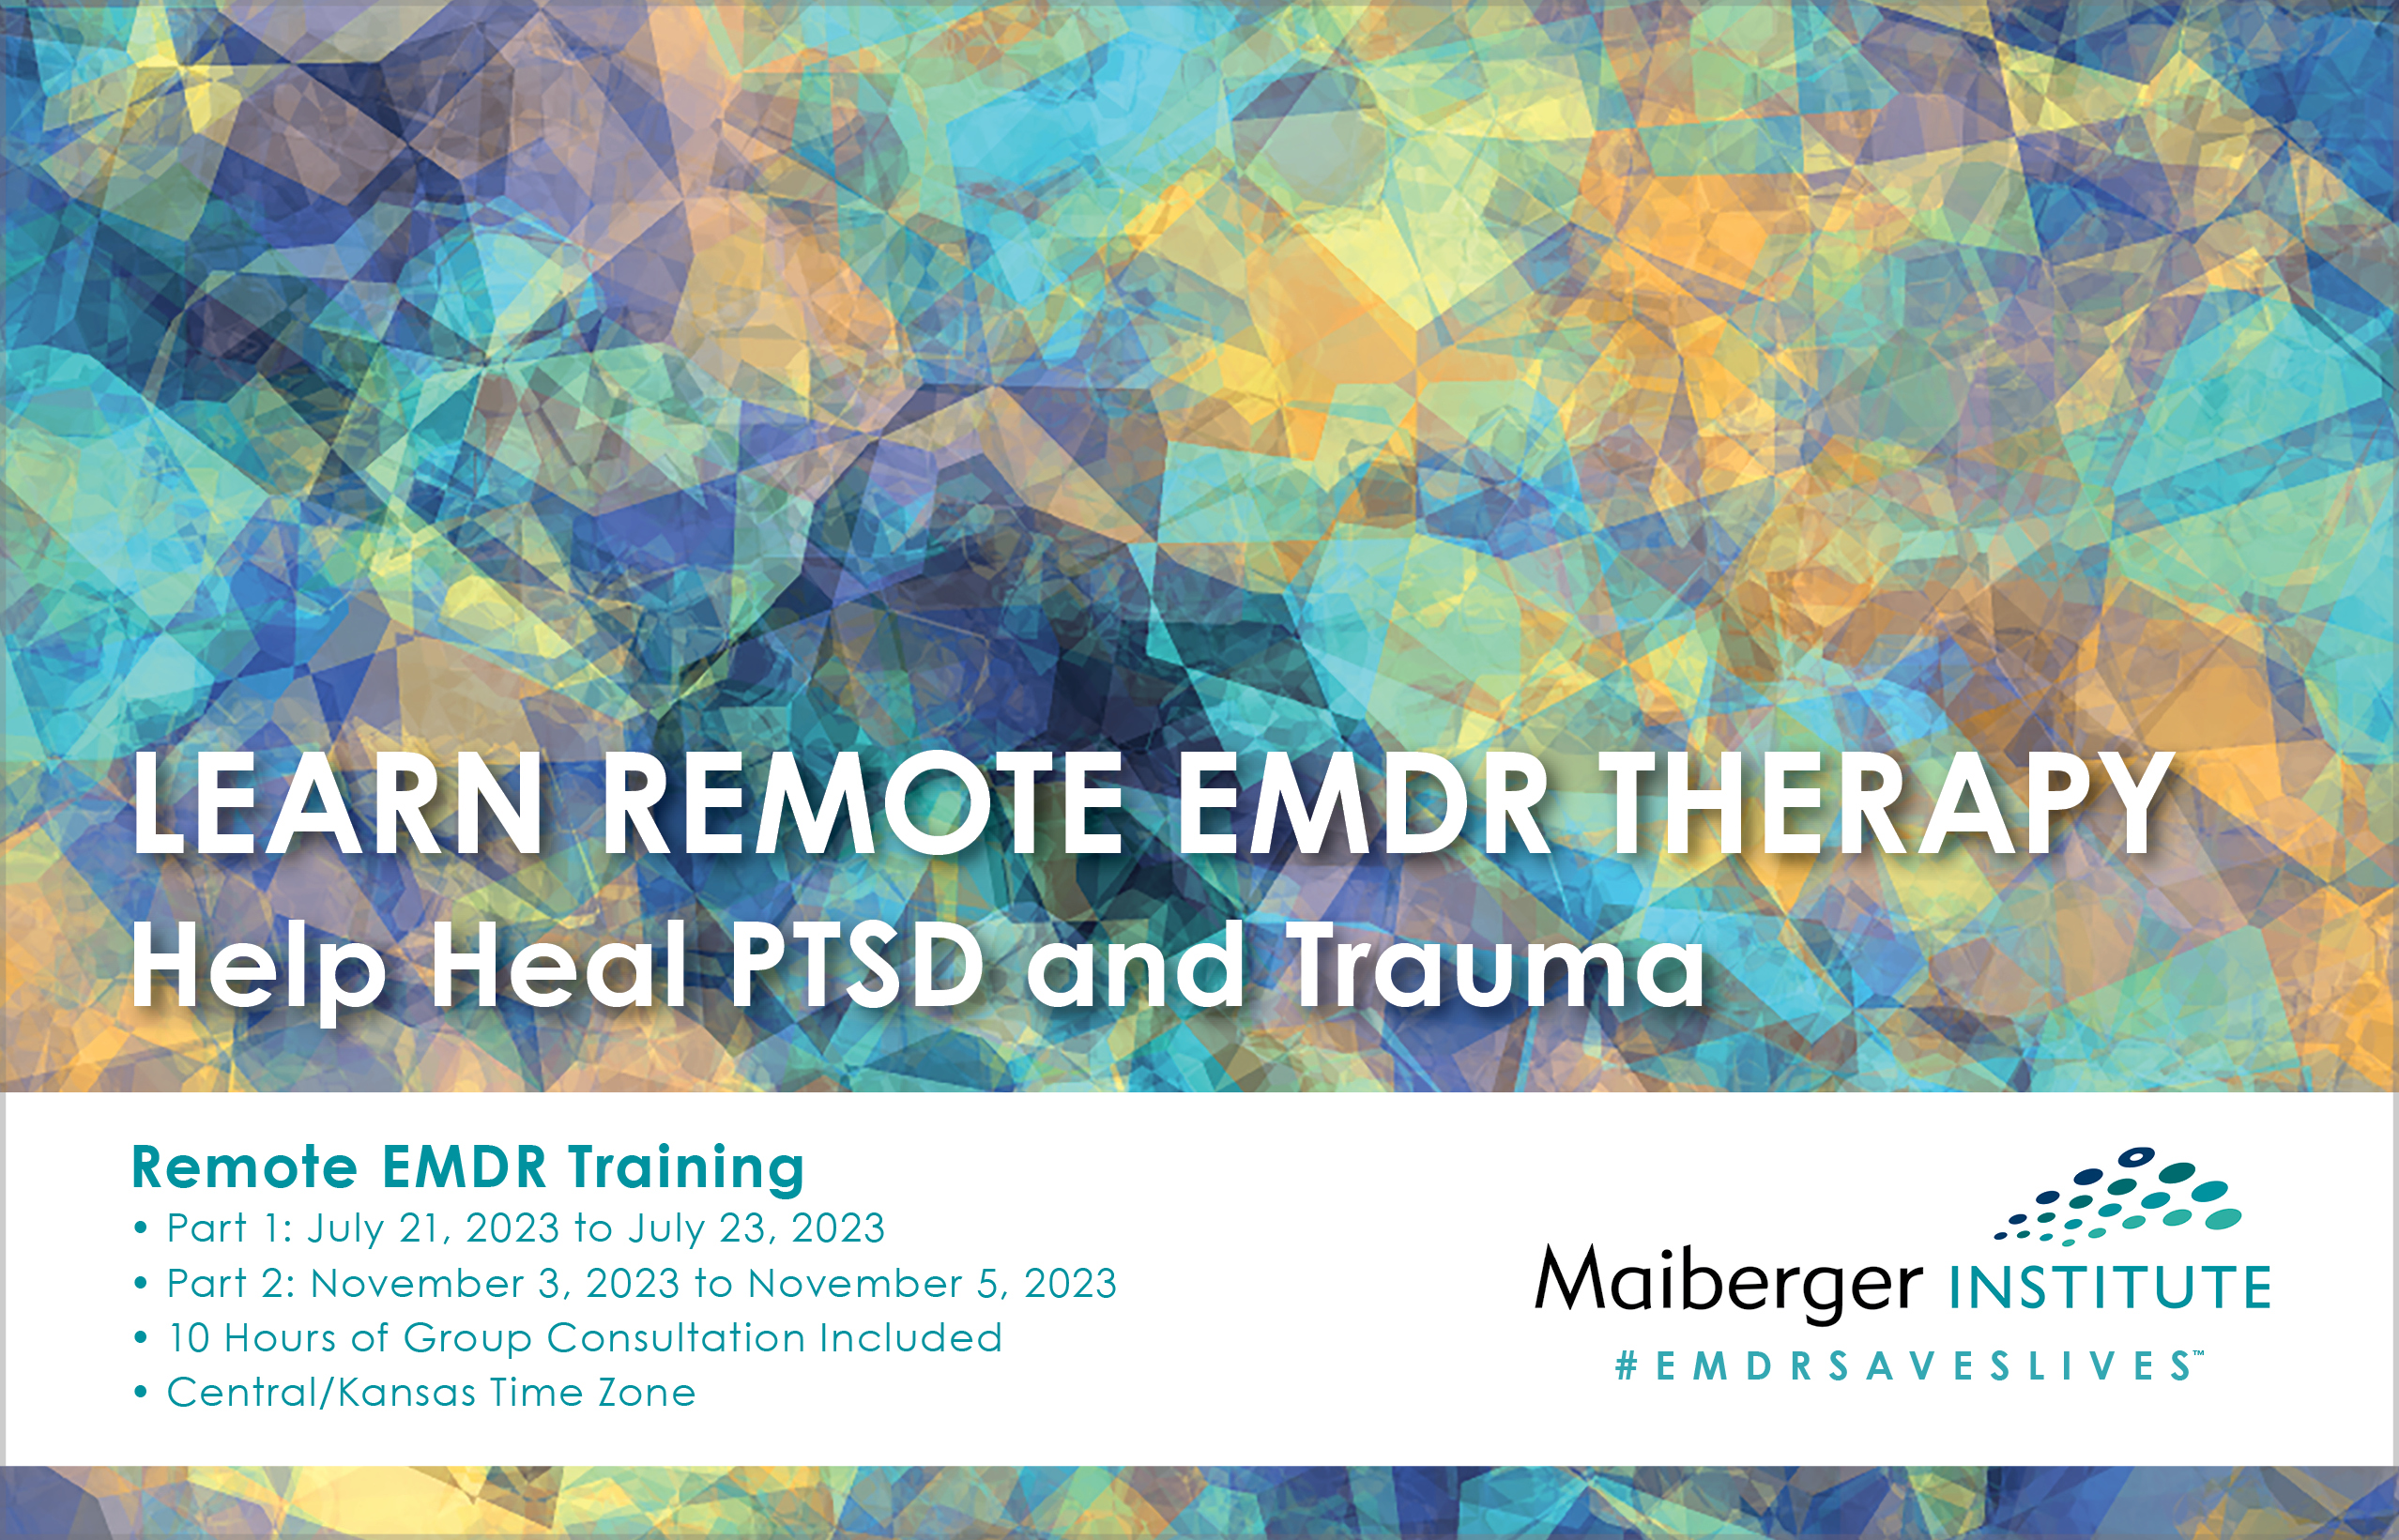 Remote EMDR Training - July 2023 and November 2023 - Maiberger Institute - EMDR TRAINING SCHEDULE